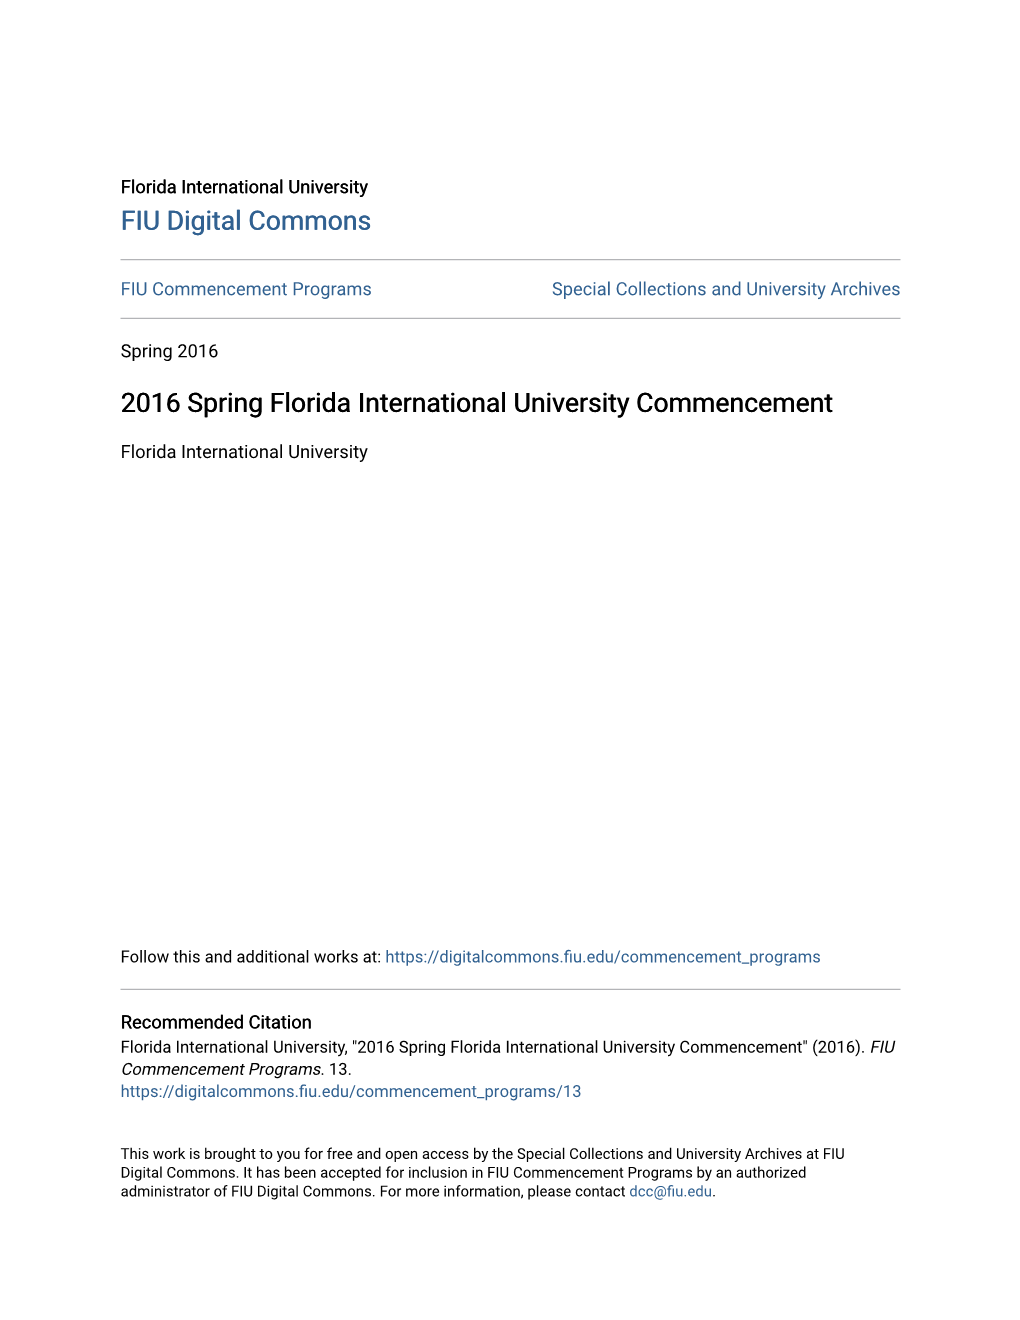 2016 Spring Florida International University Commencement